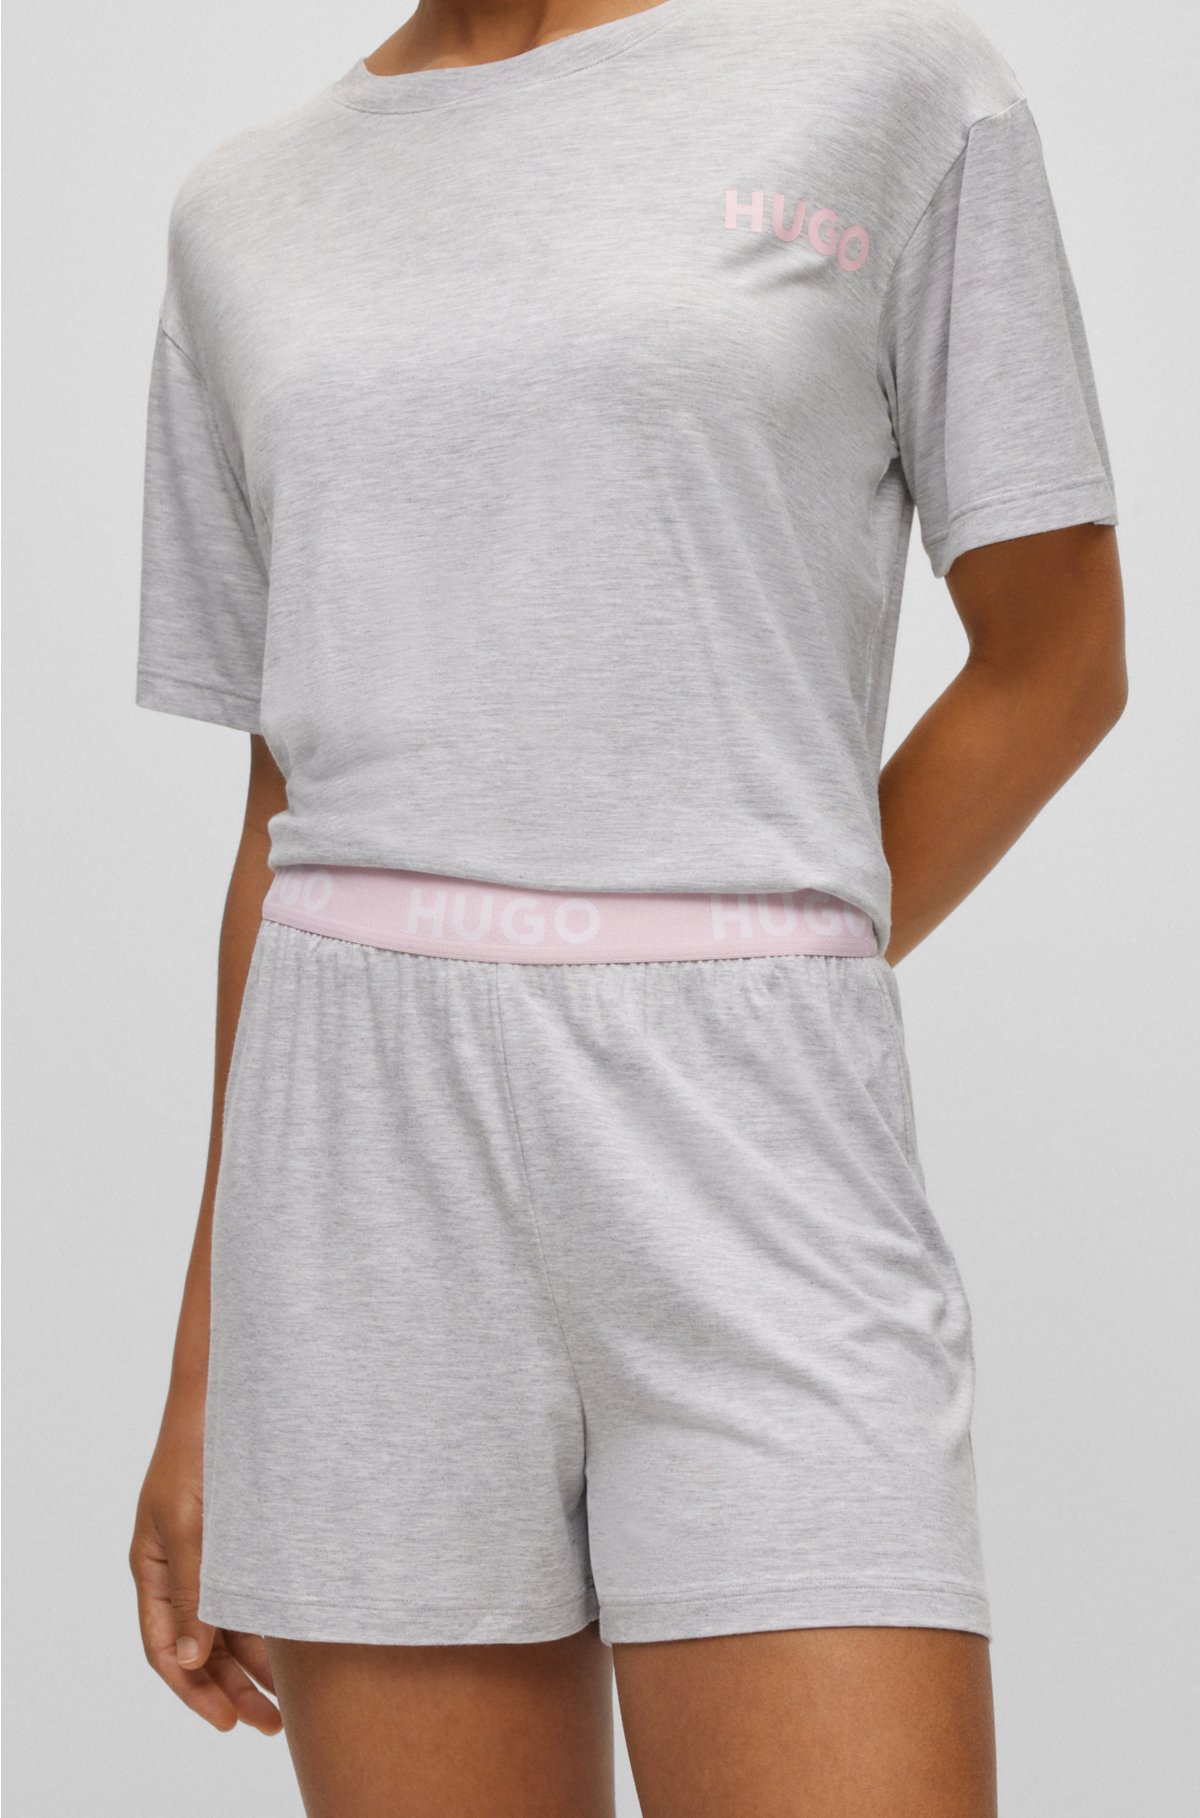 - Stretch-jersey pajama HUGO logo with shorts waistband